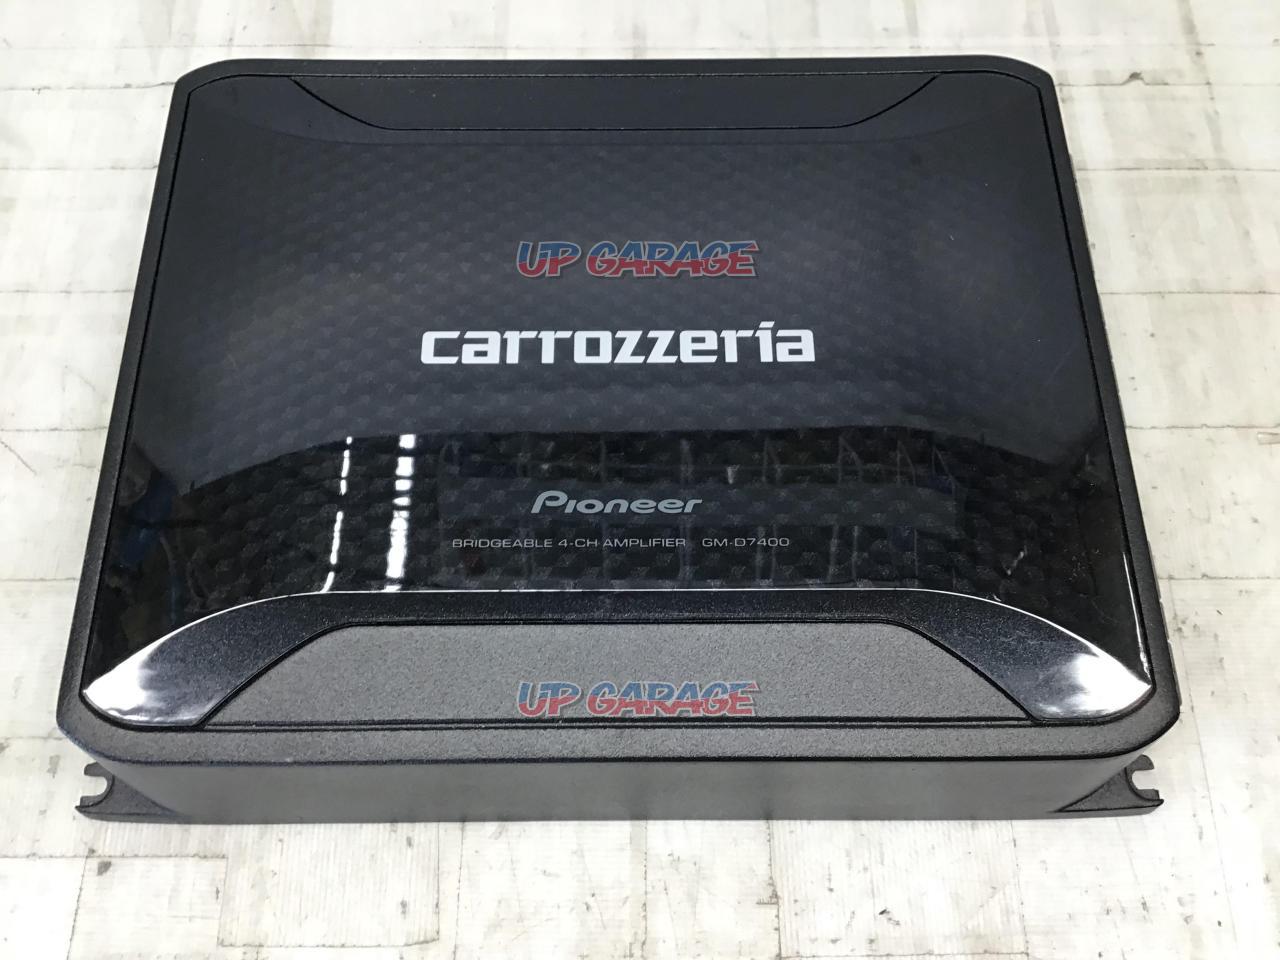 carrozzeria(カロッツェリア) GM-D7400 200wx4ch ブリッジャブルパワーアンプ 2012モデル 1台 | アンプ